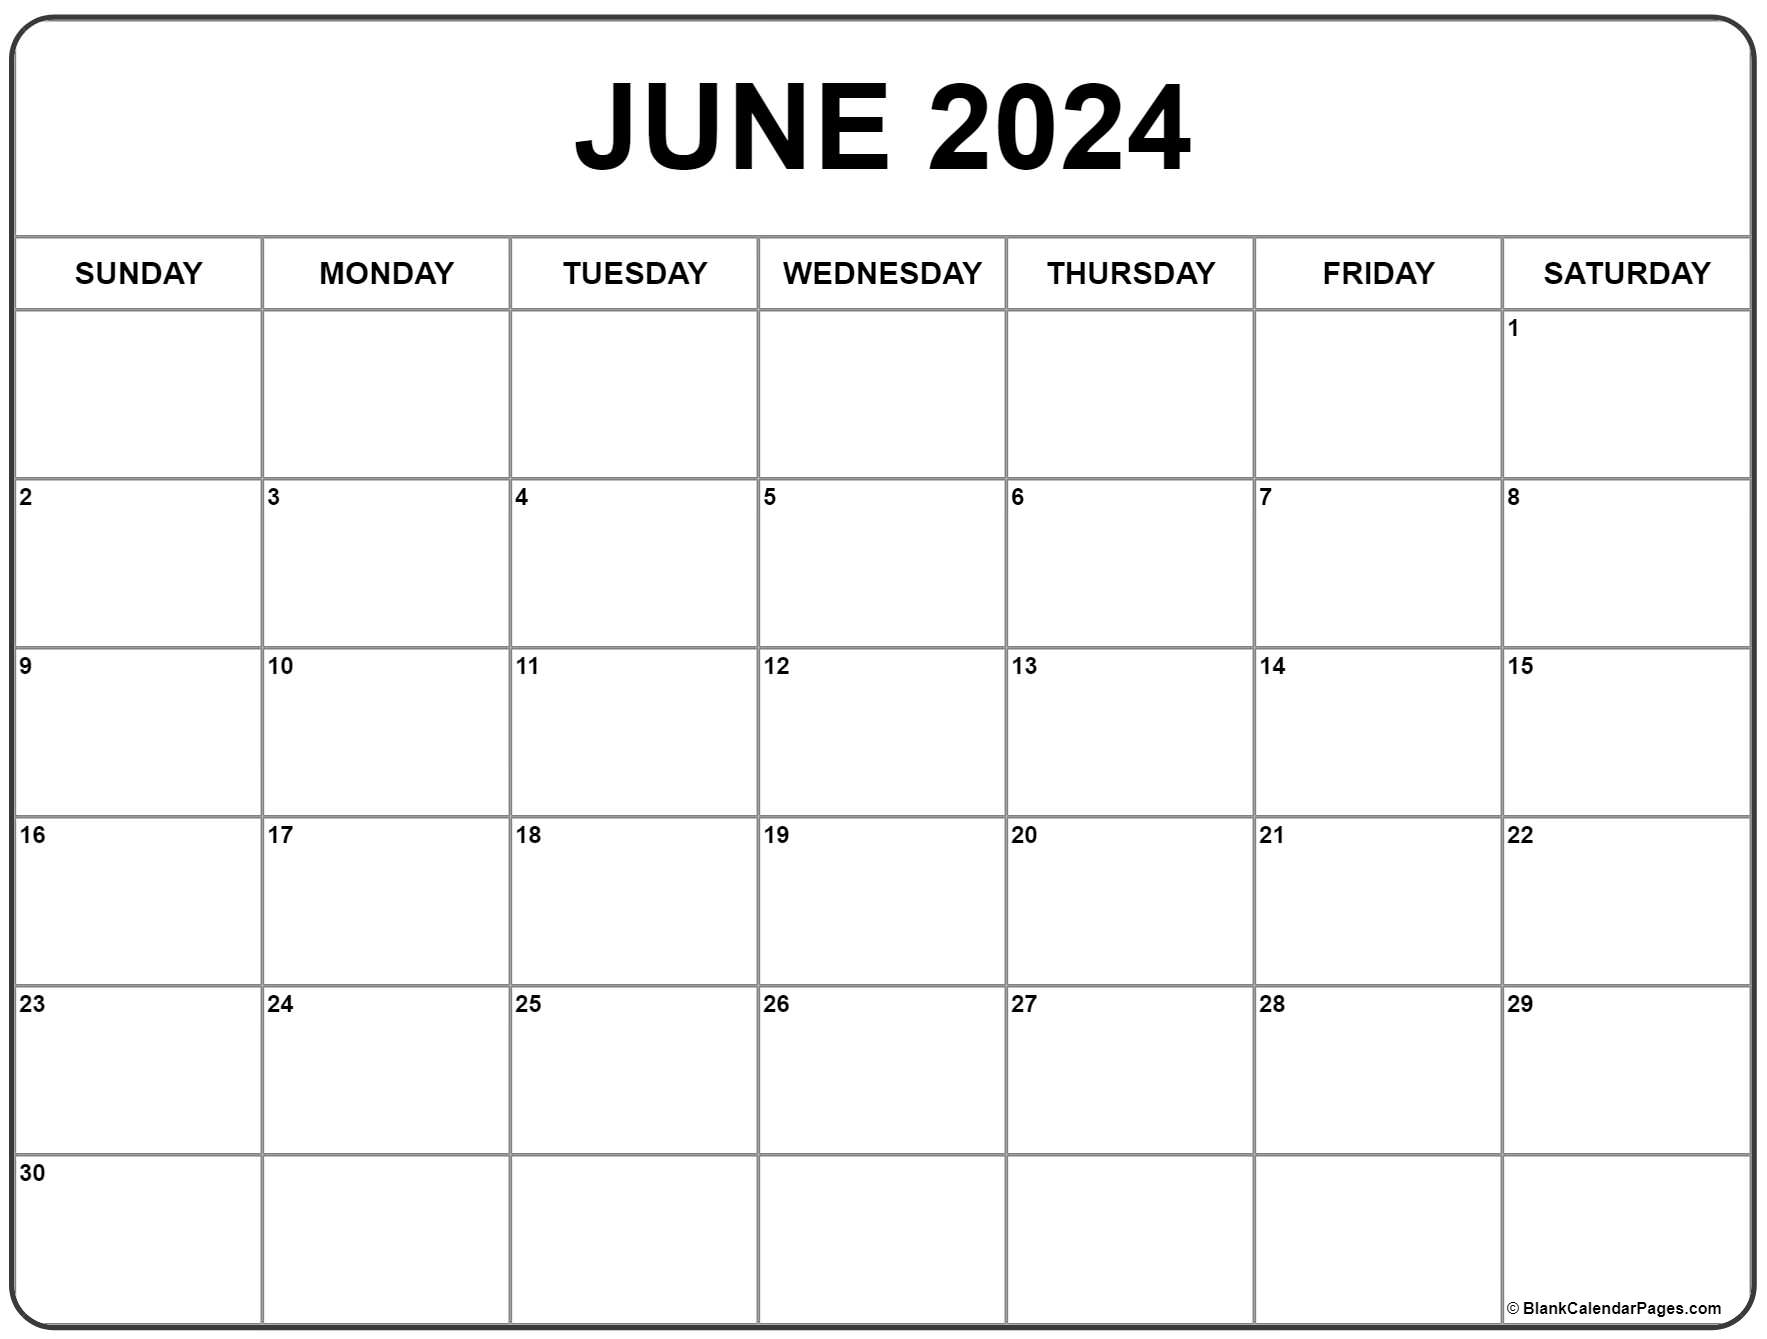 Print A Calendar June 2022 June 2022 Calendar | Free Printable Calendar Templates